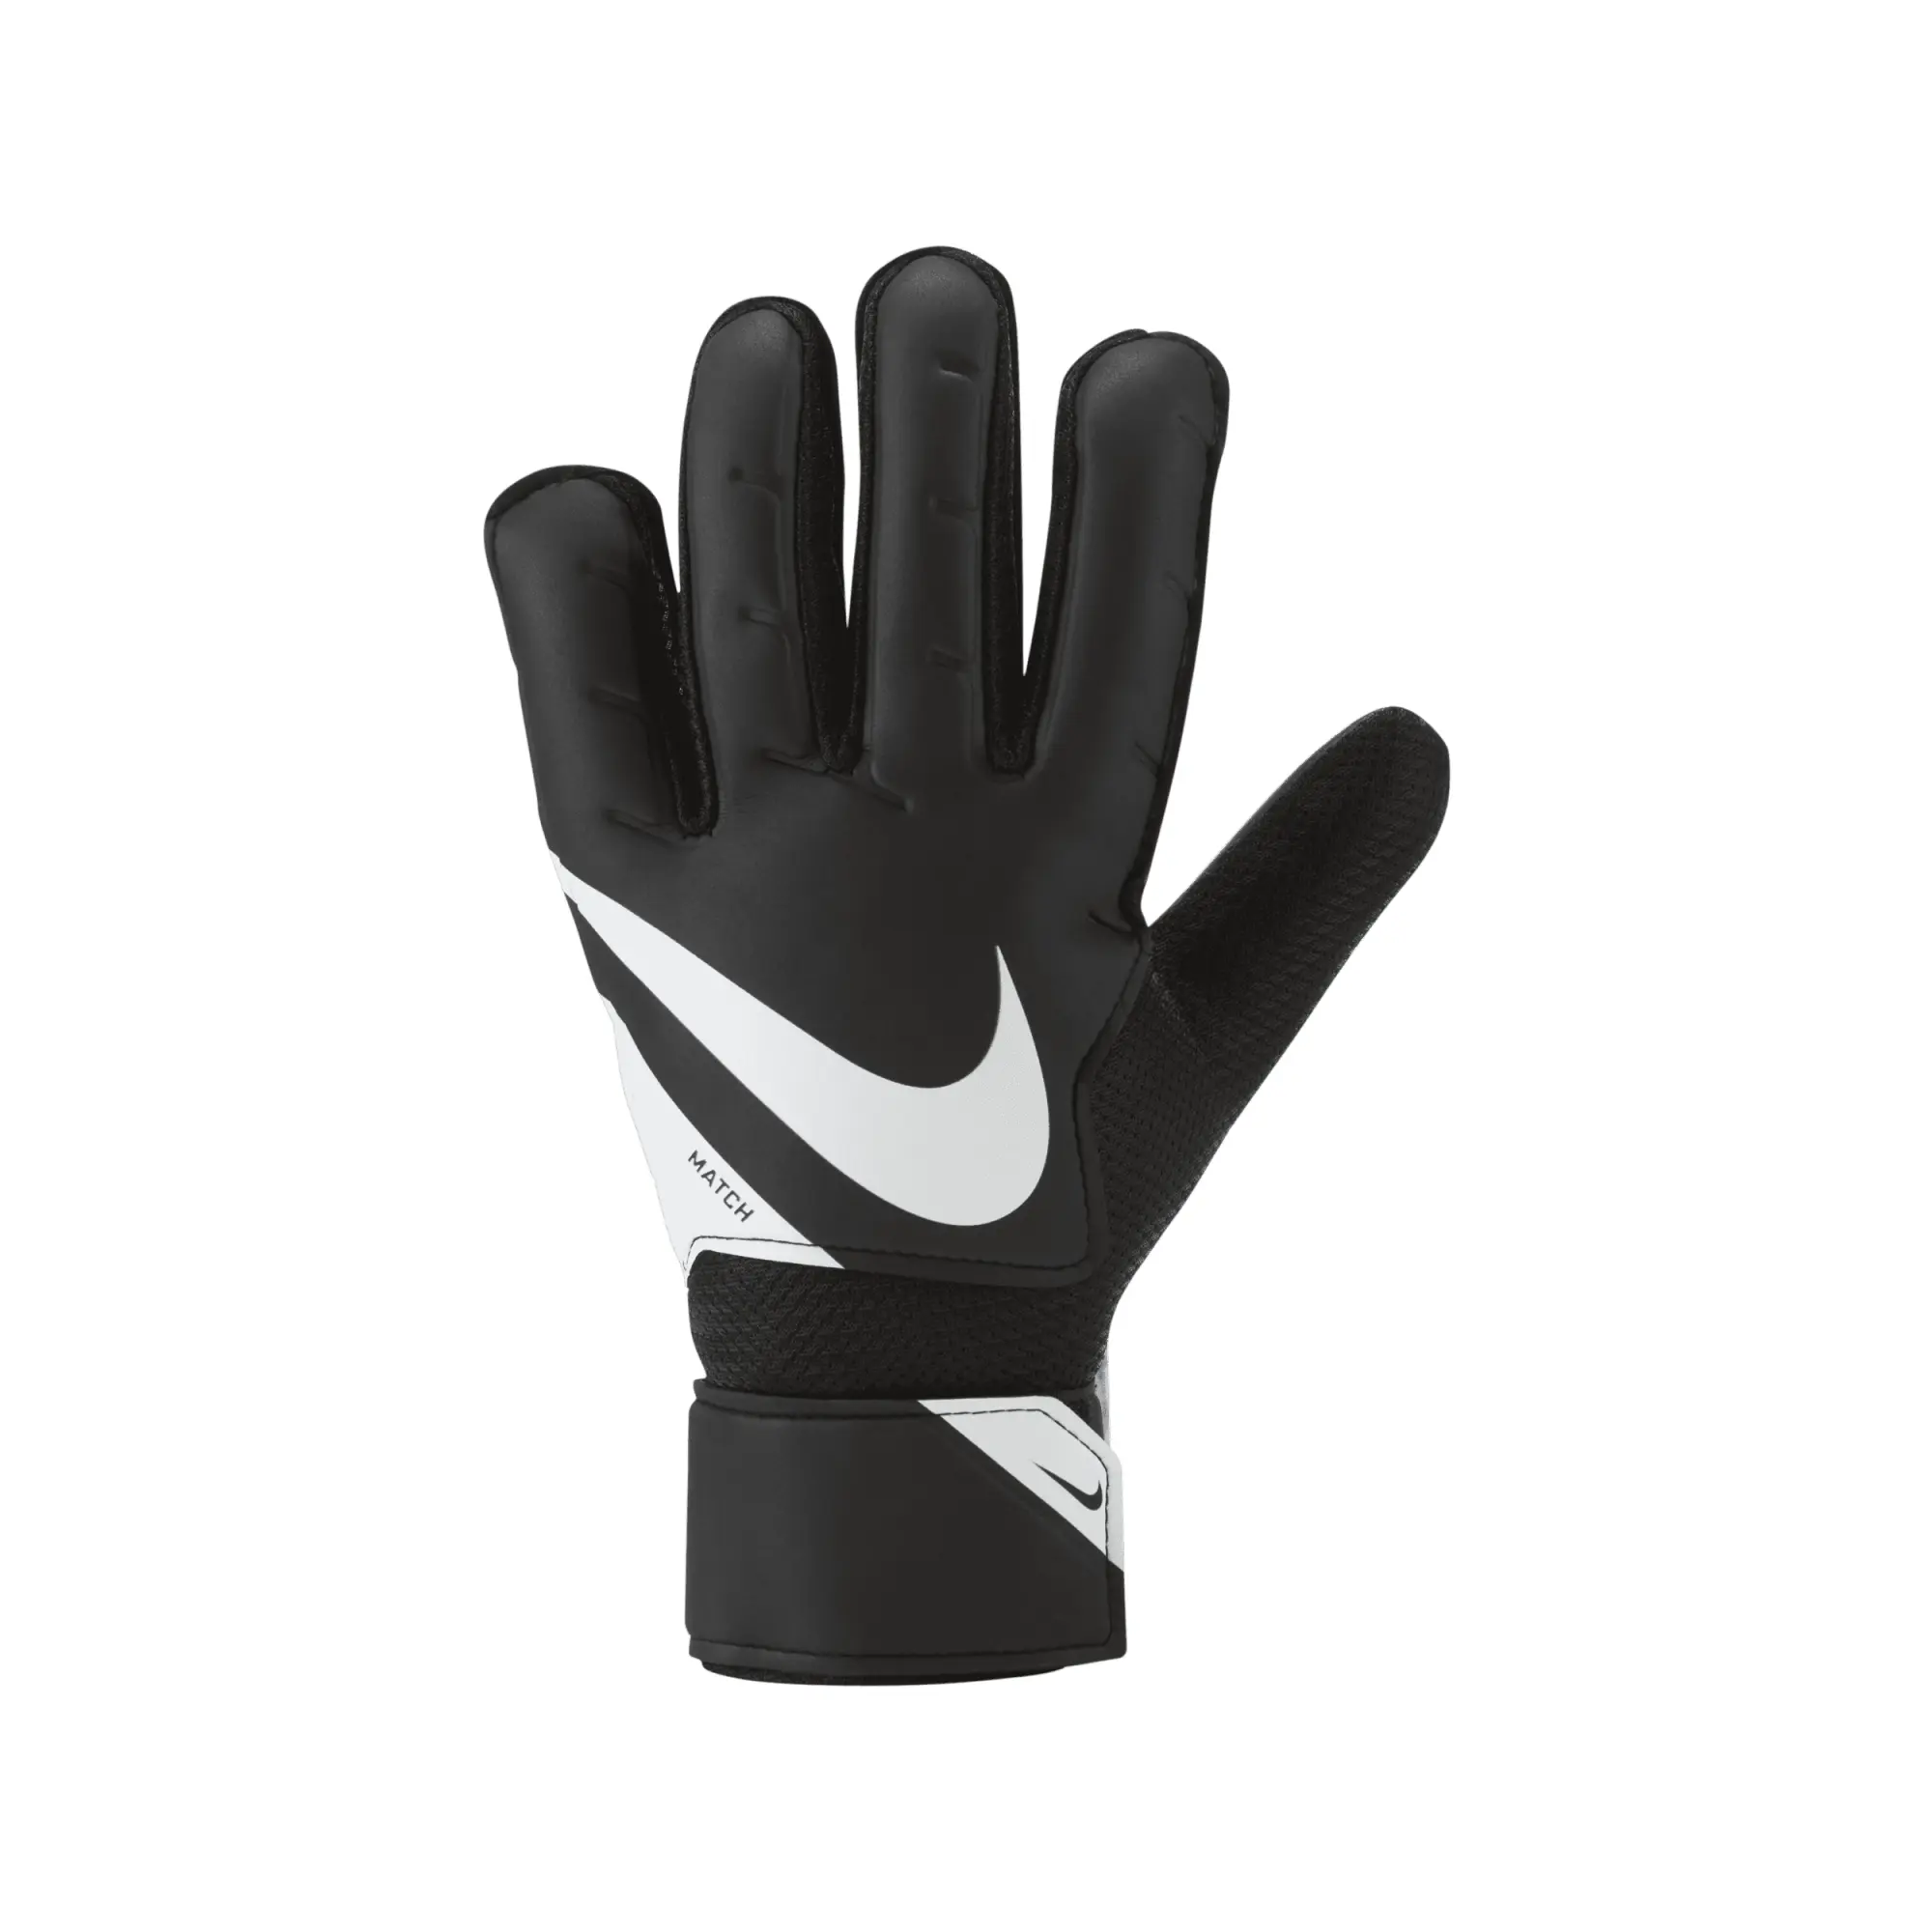 Nike Men's Academy Match Goal Keeper Gloves BLACK, Black